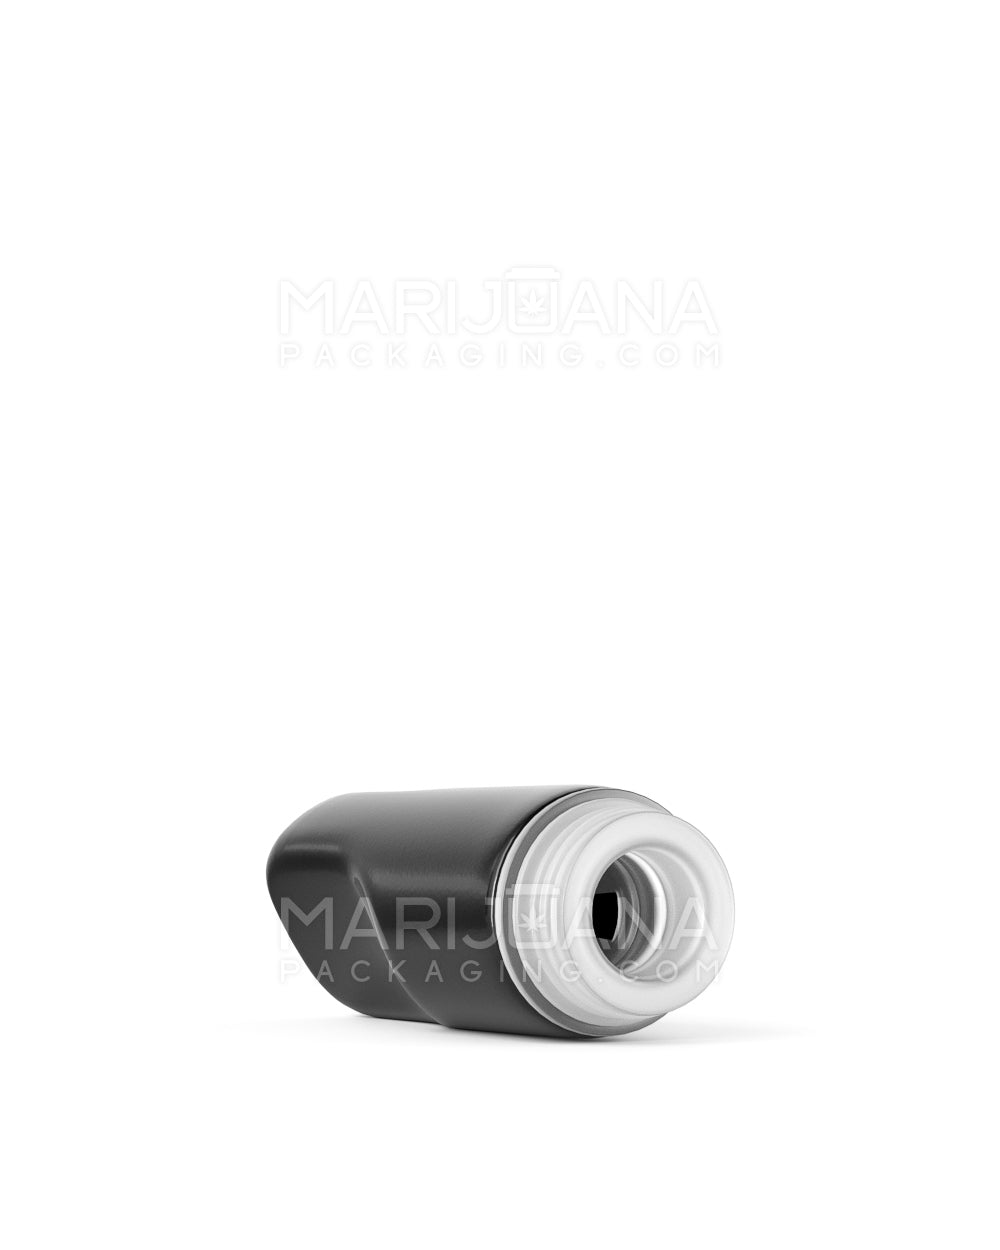 AVD | Flat Vape Mouthpiece for Glass Cartridges | Black Ceramic - Eazy Press - 600 Count - 6